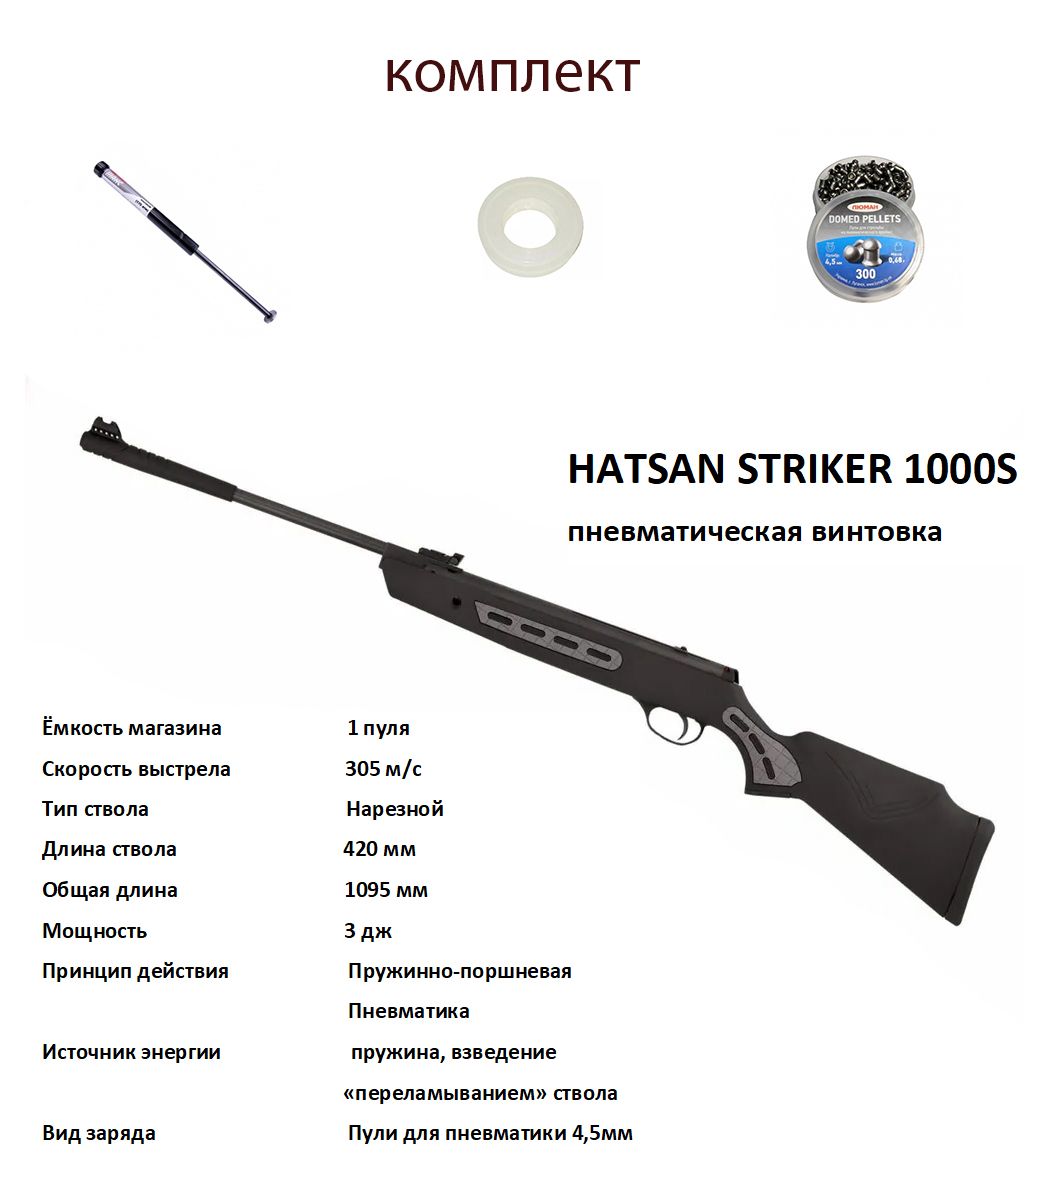 Хатсан страйкер характеристики. Пневматическая винтовка Hatsan Striker 1000s. Пневматическая винтовка Hatsan 1000 s характеристики. Хатсан Страйкер 1000. Пневматическая винтовка Хатсан Страйкер характеристики.